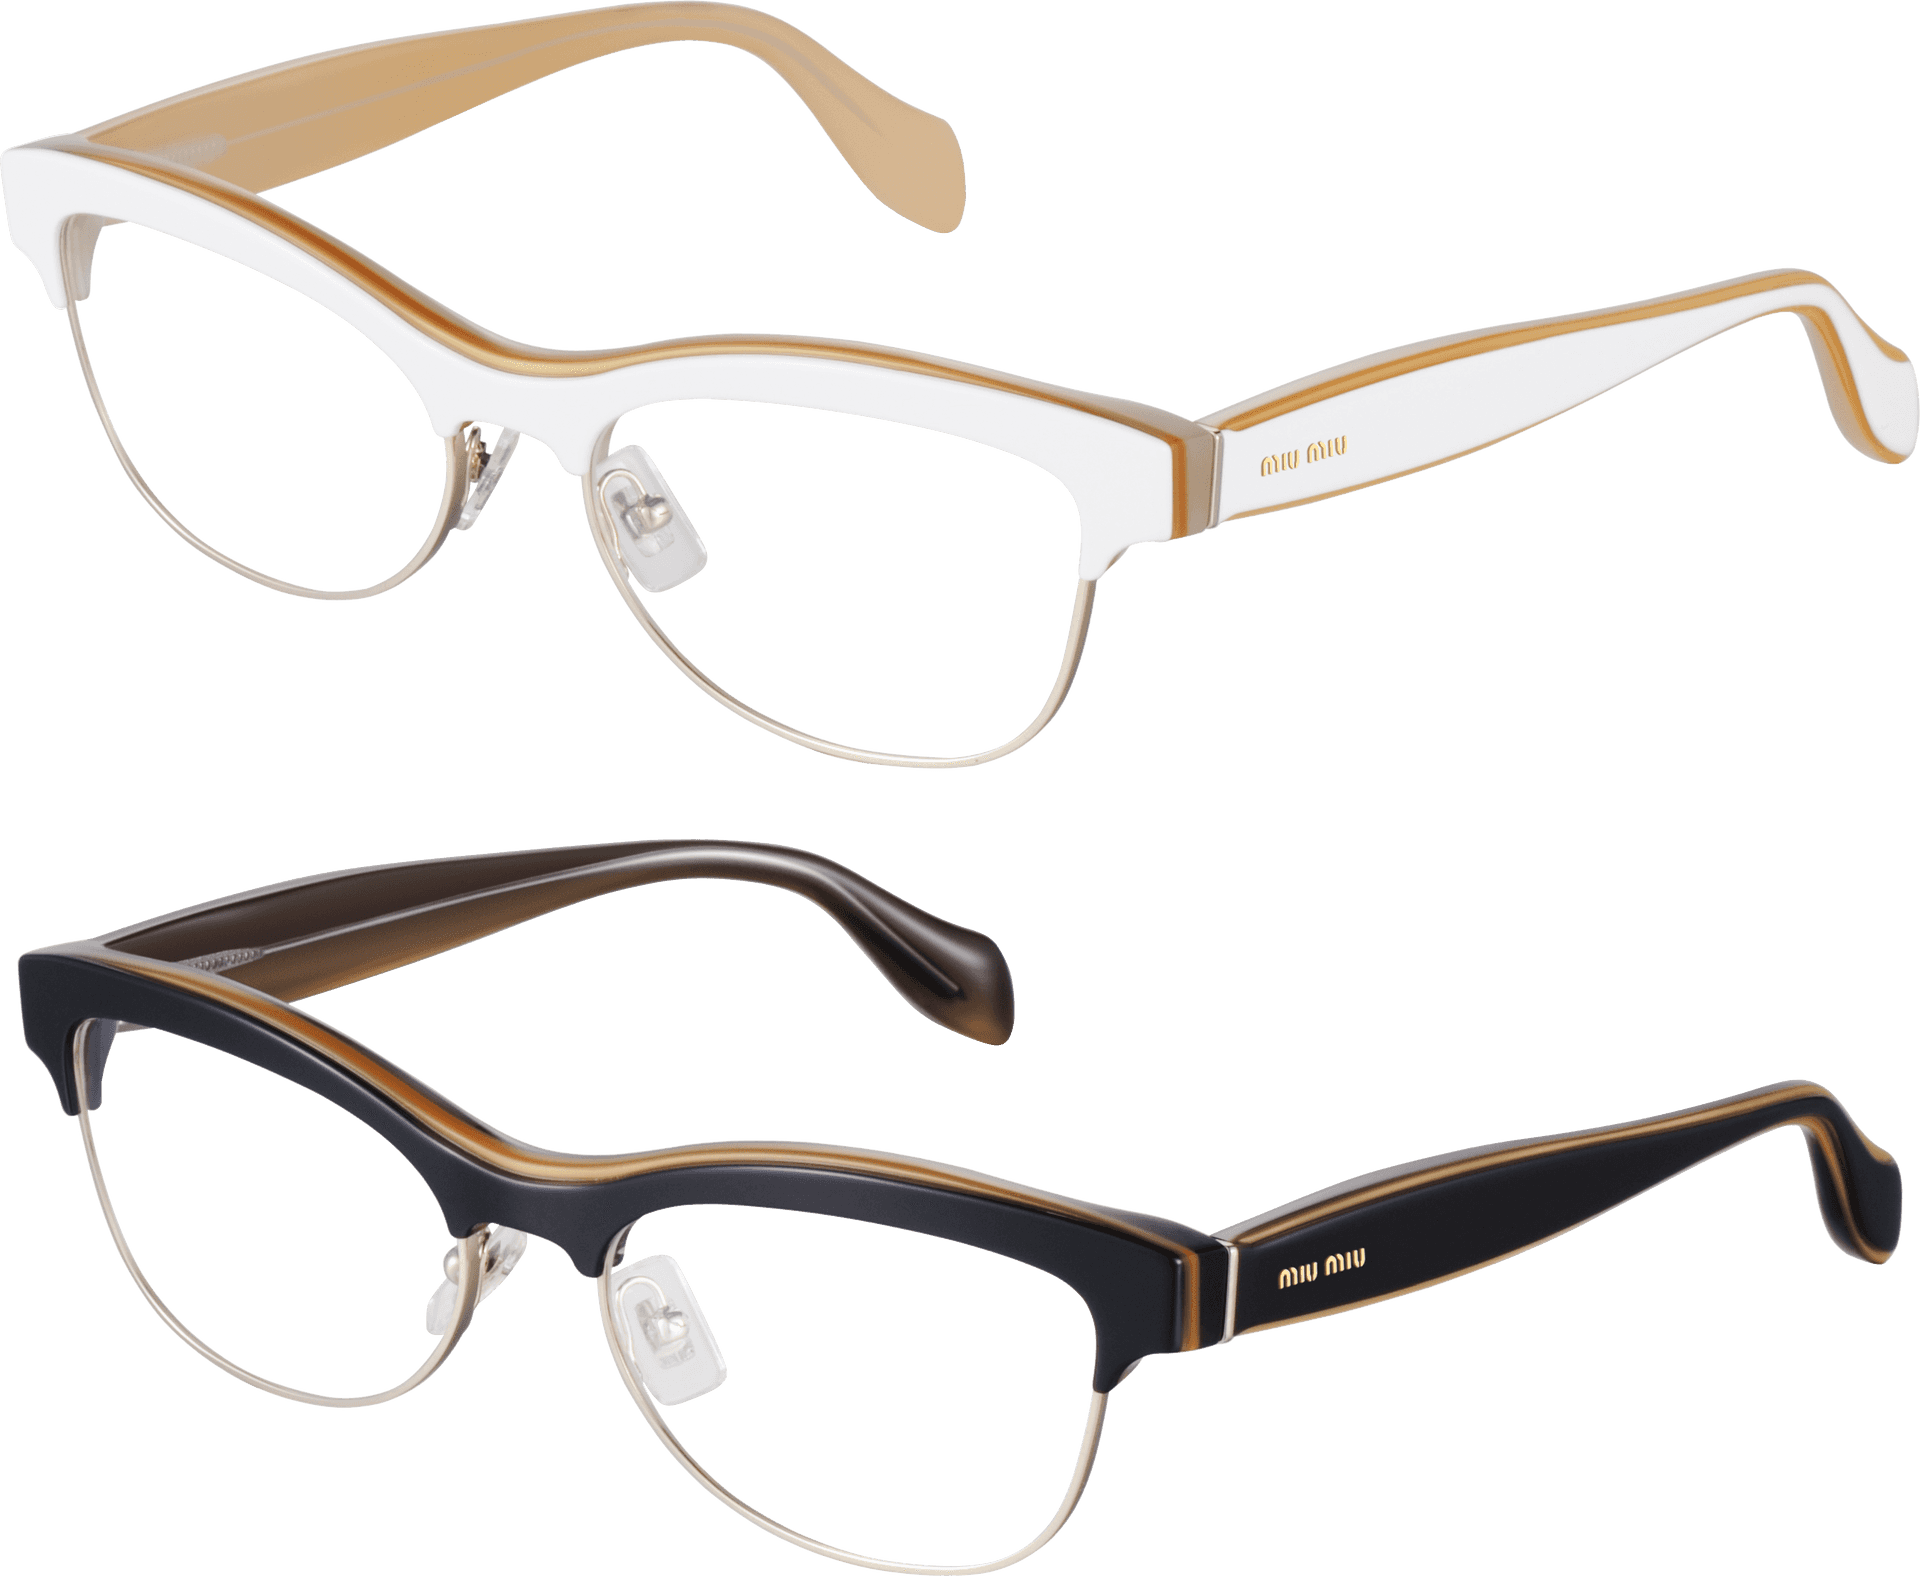 Designer Eyeglasses Showcase PNG